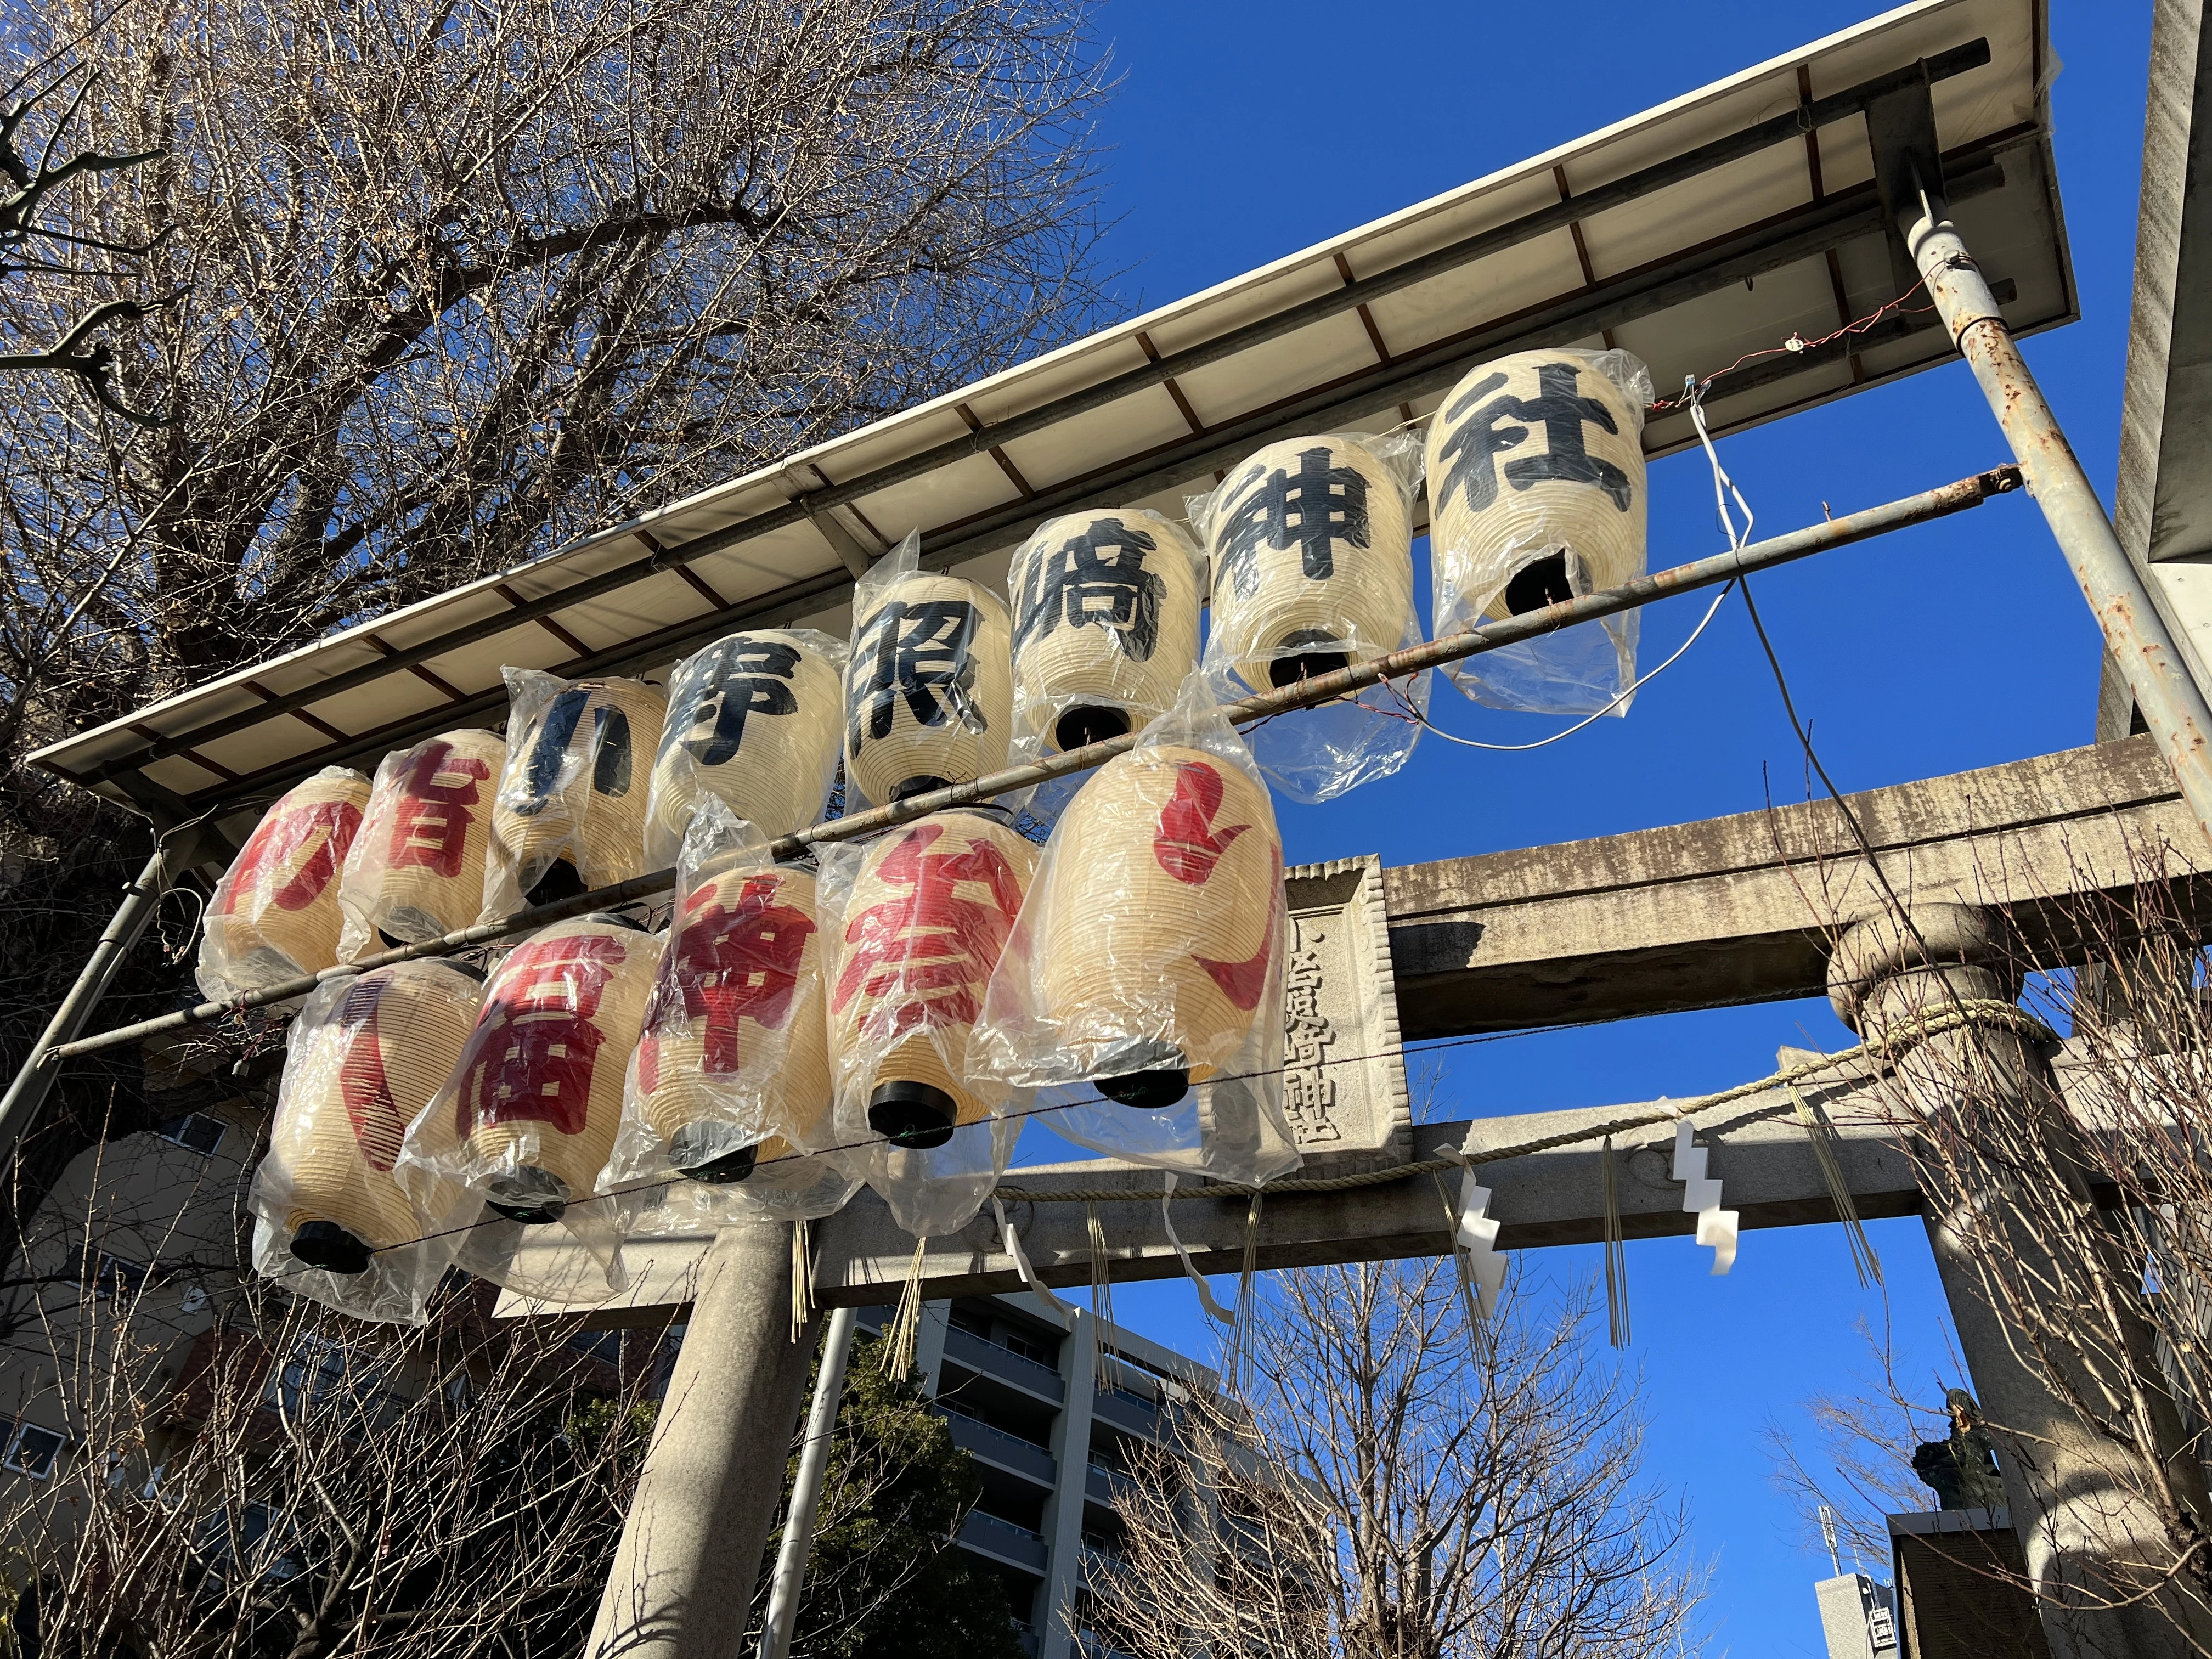 小野照崎神社の鳥居